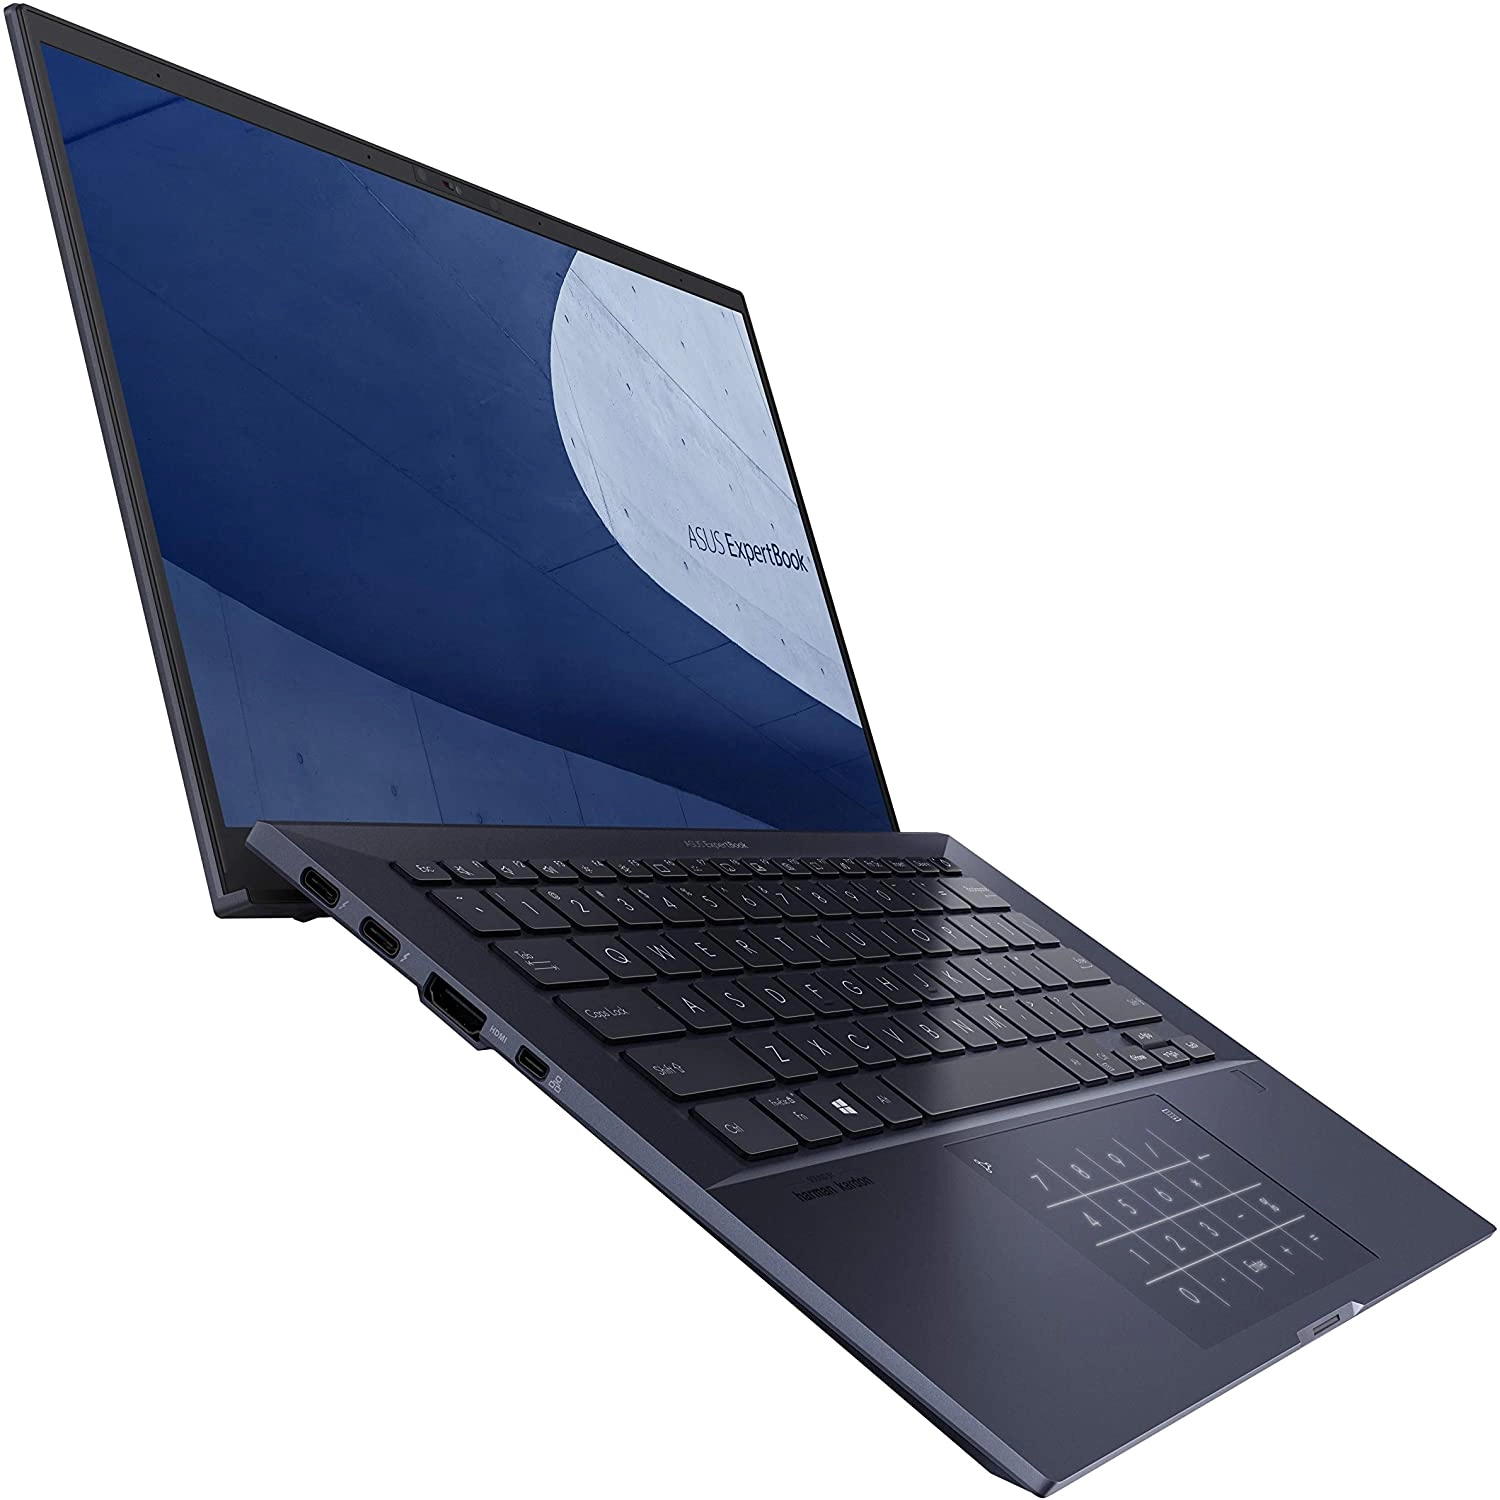 Asus ExpertBook laptop image